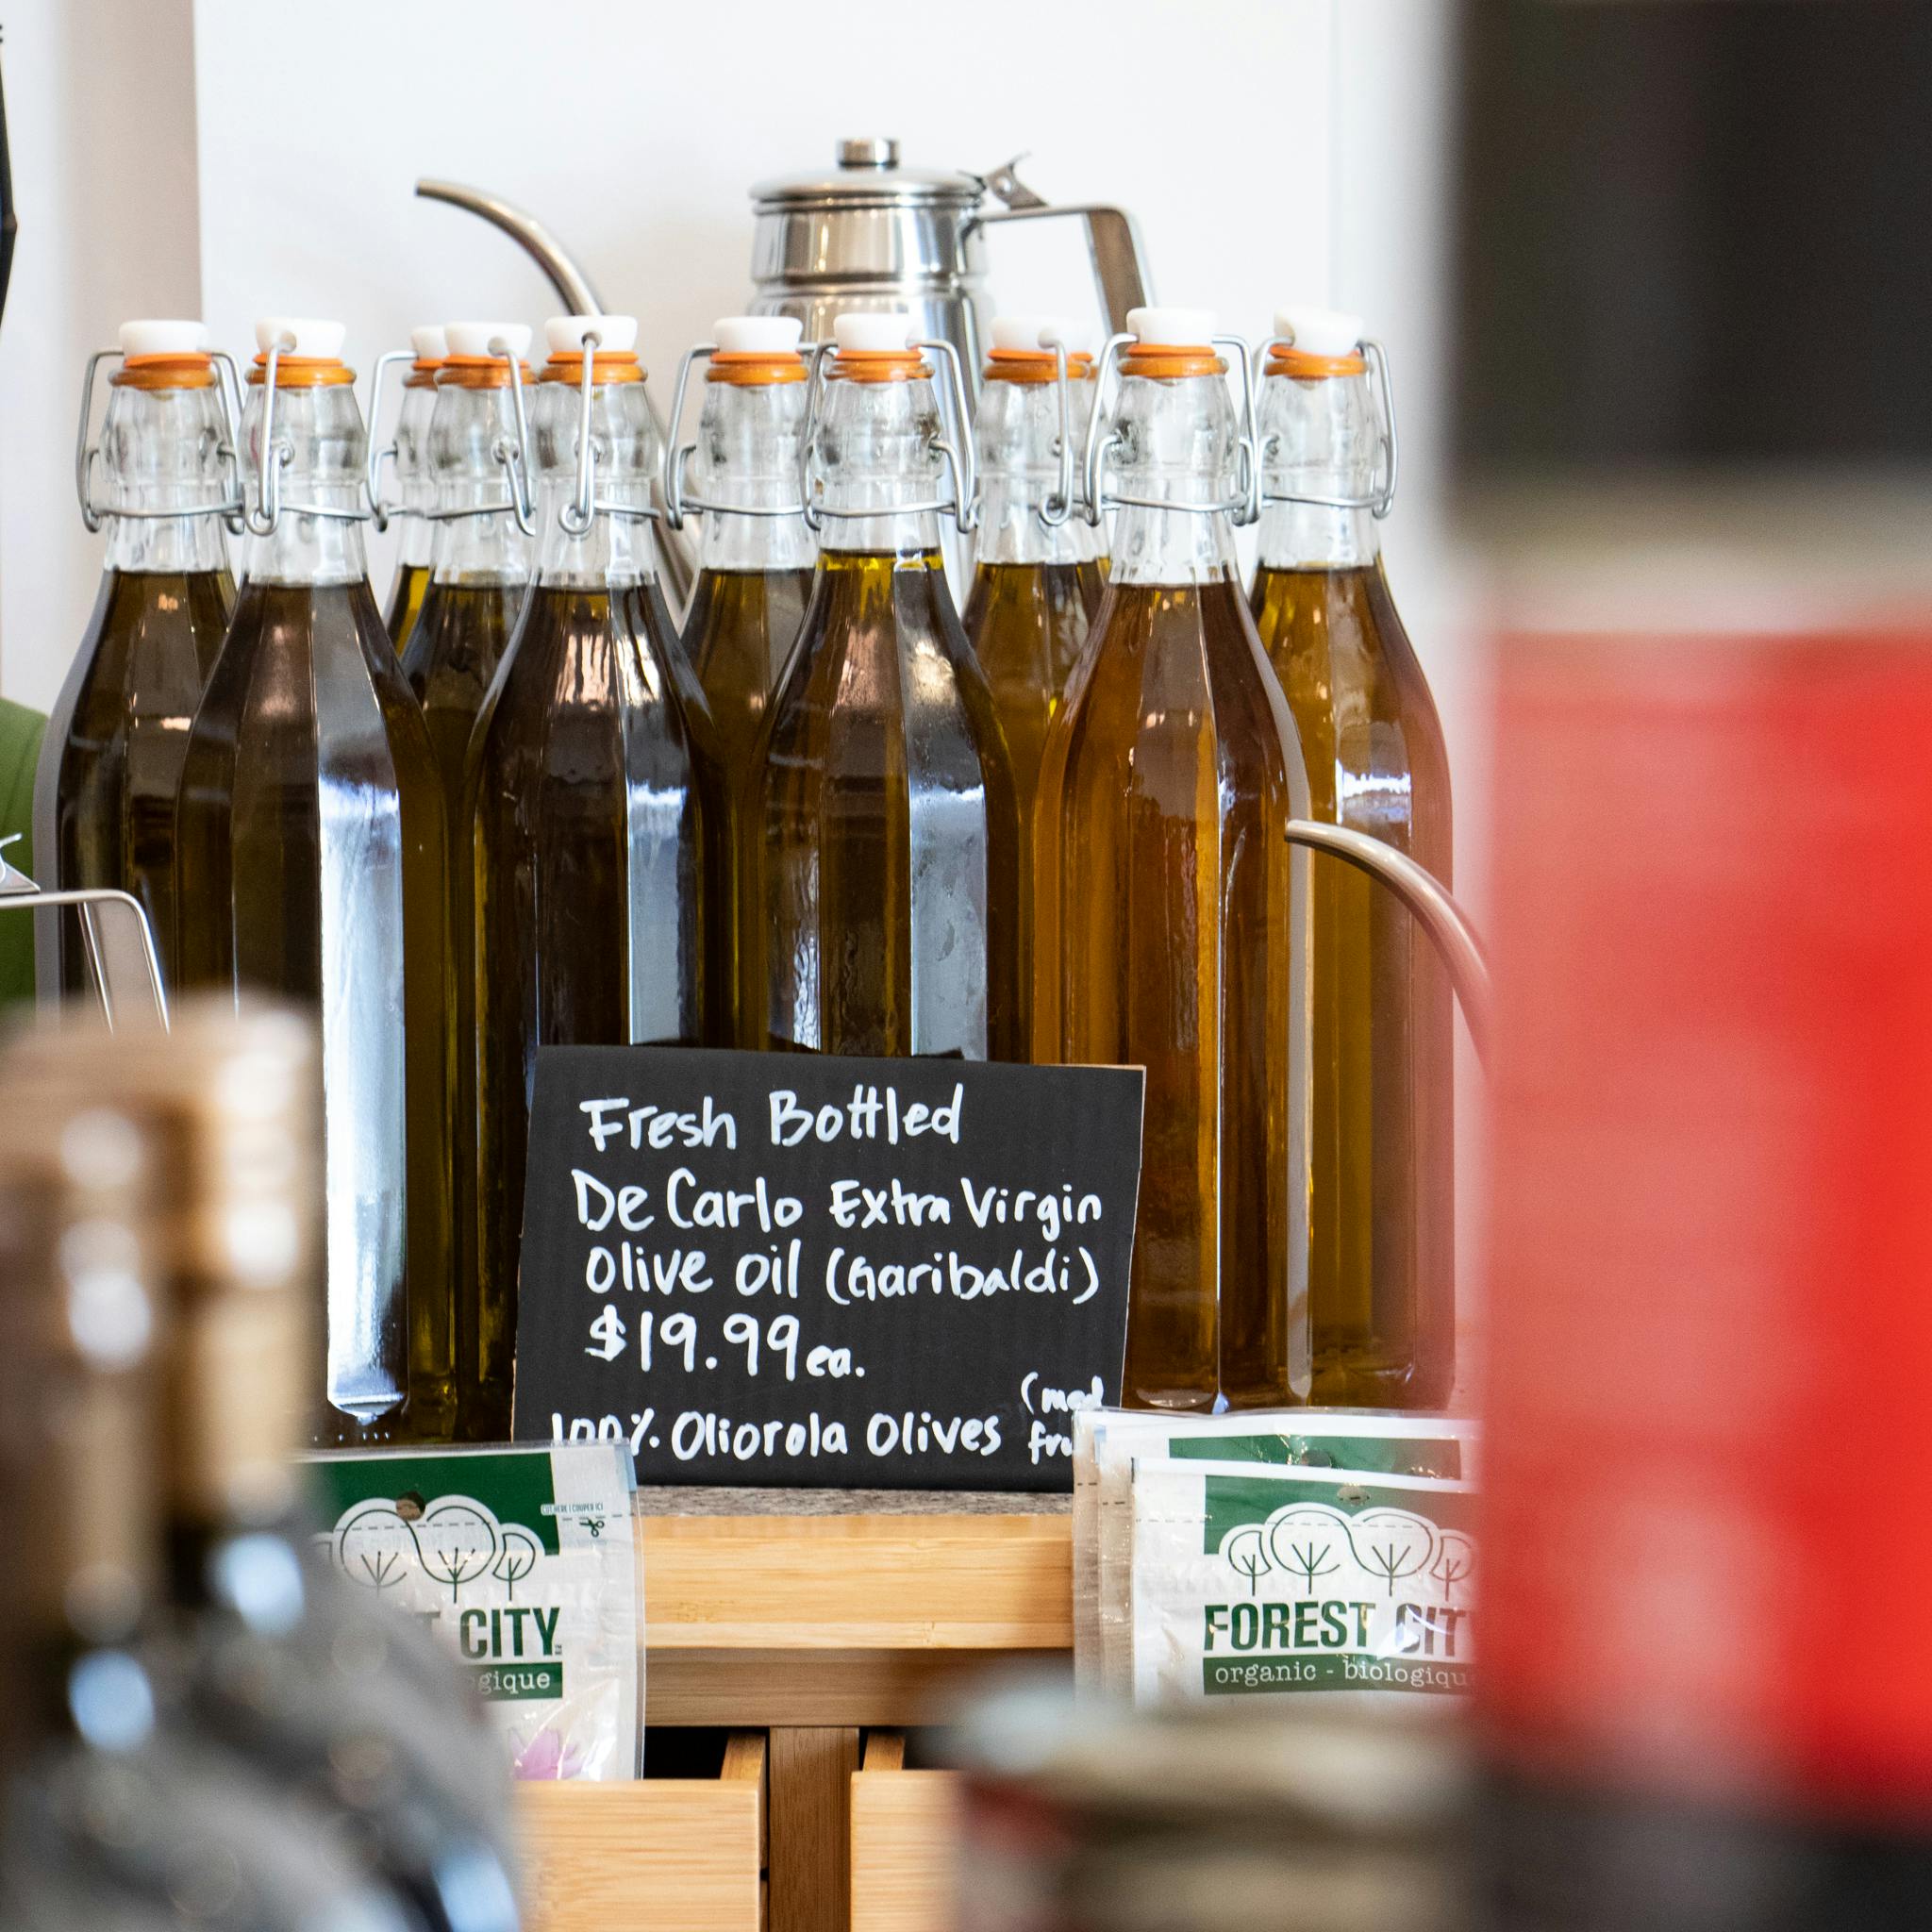 Fresh bottled olive oil from La Spesa Food Market. Image by: @paothebao